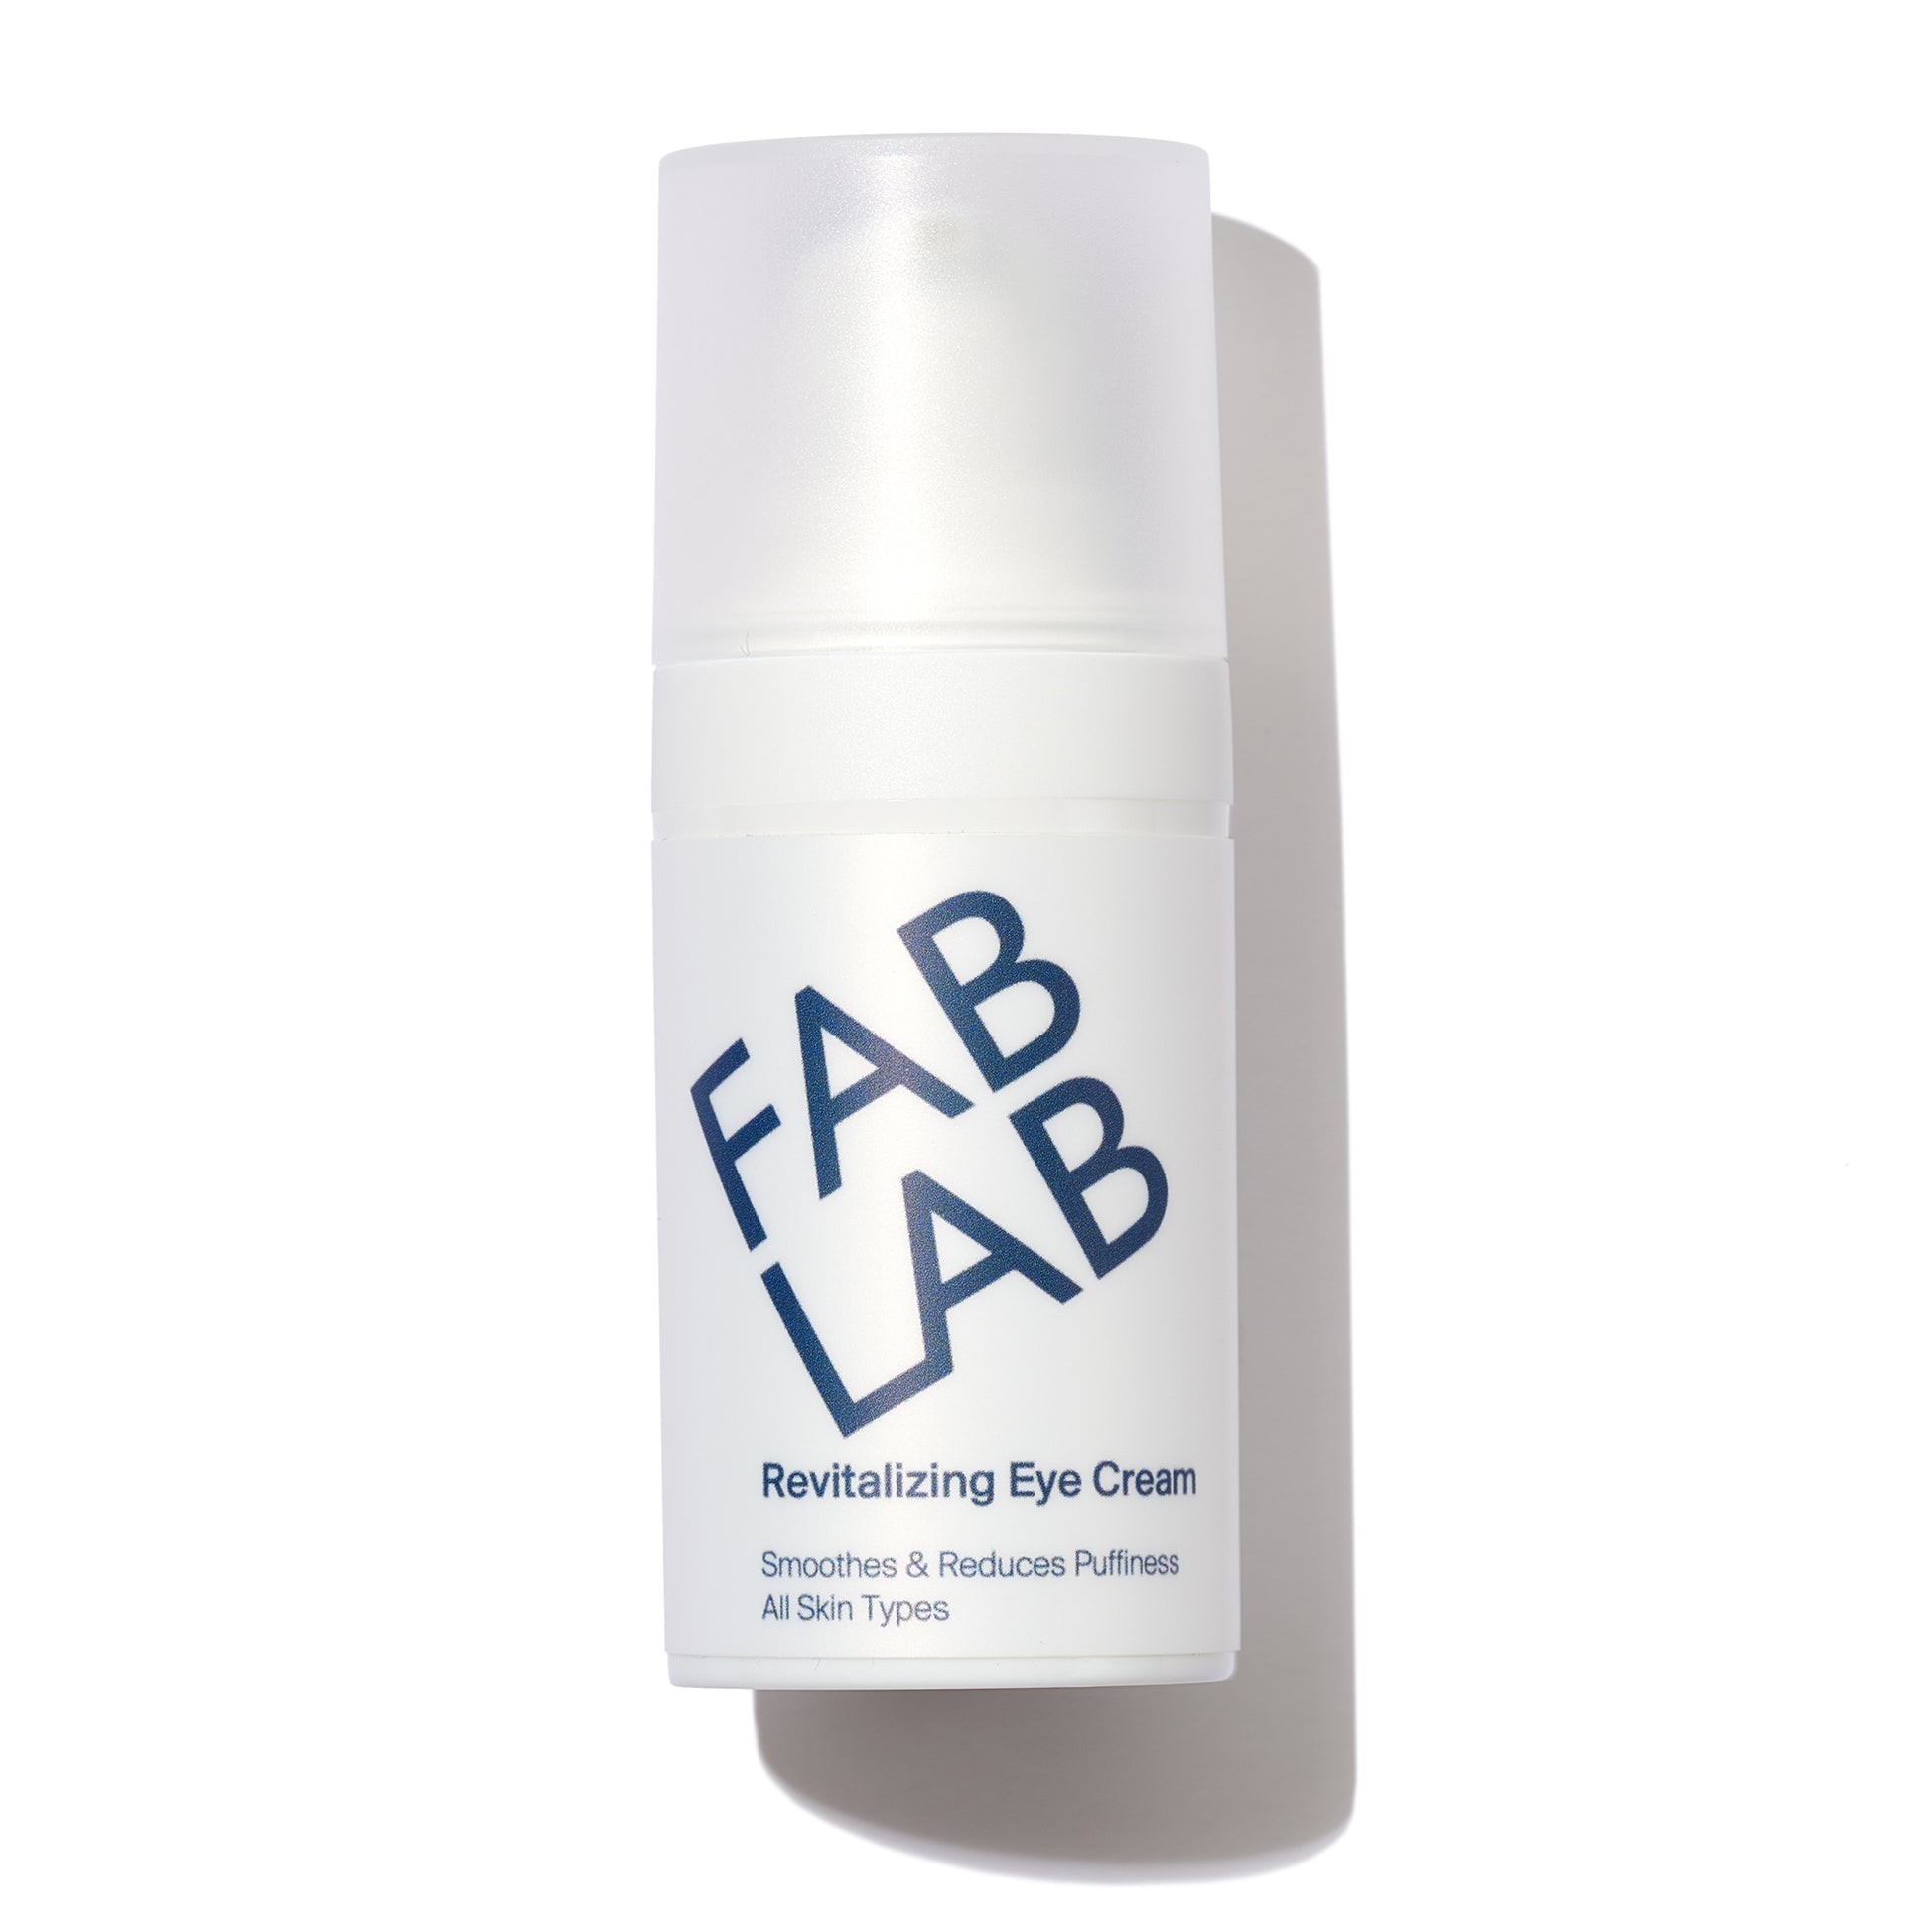 Revitalizing Eye Cream - FABLAB Skincare - fablabskincare